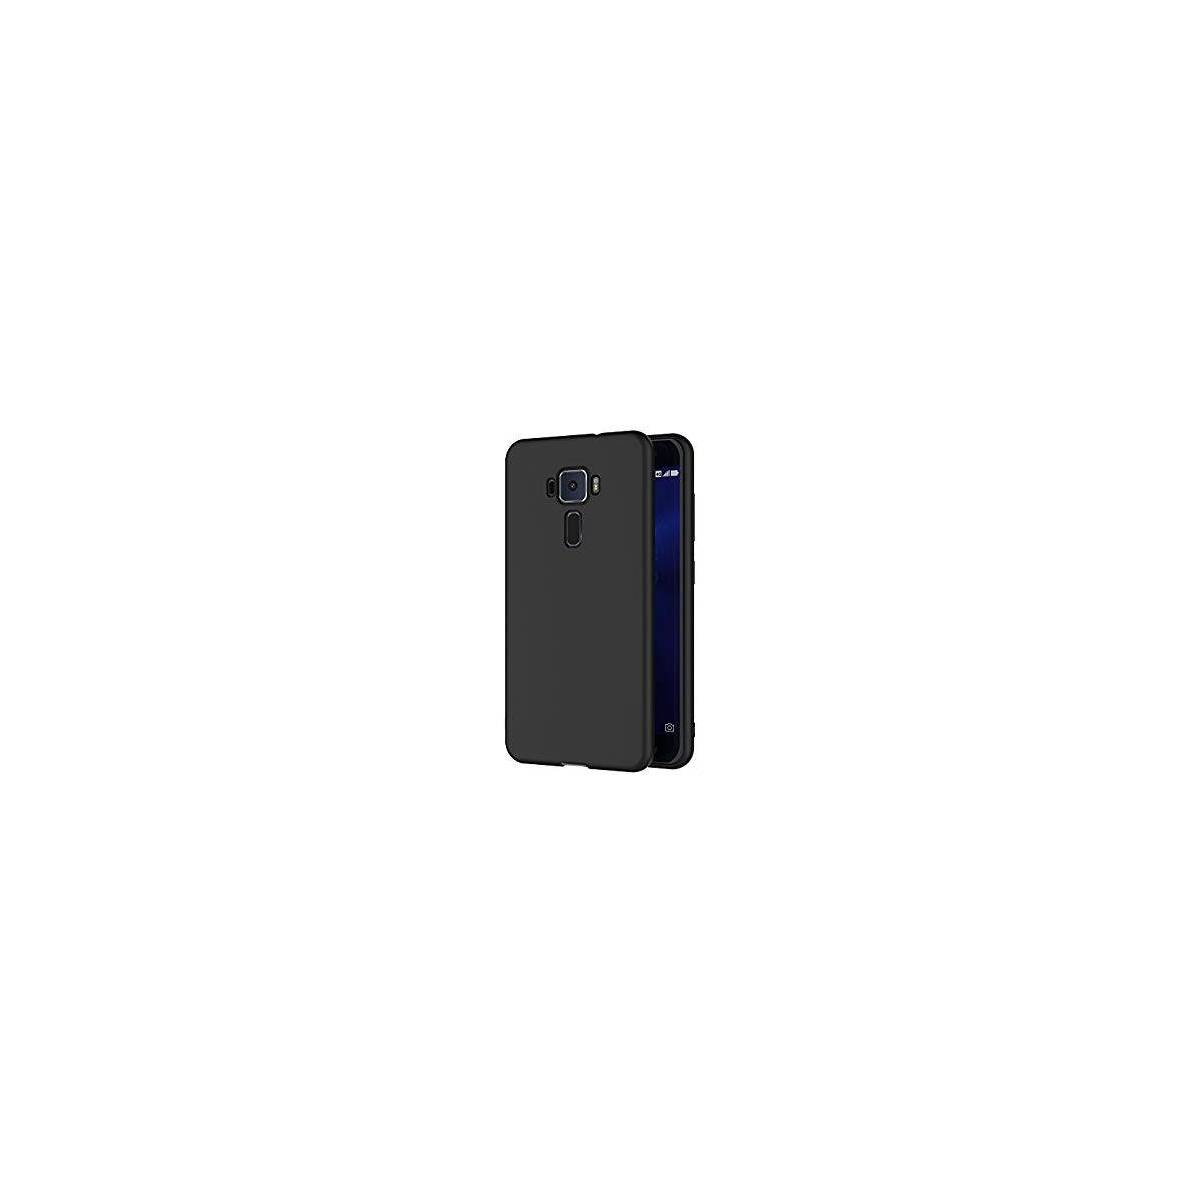 Coque silicone Noire Zenfone ZE520KL